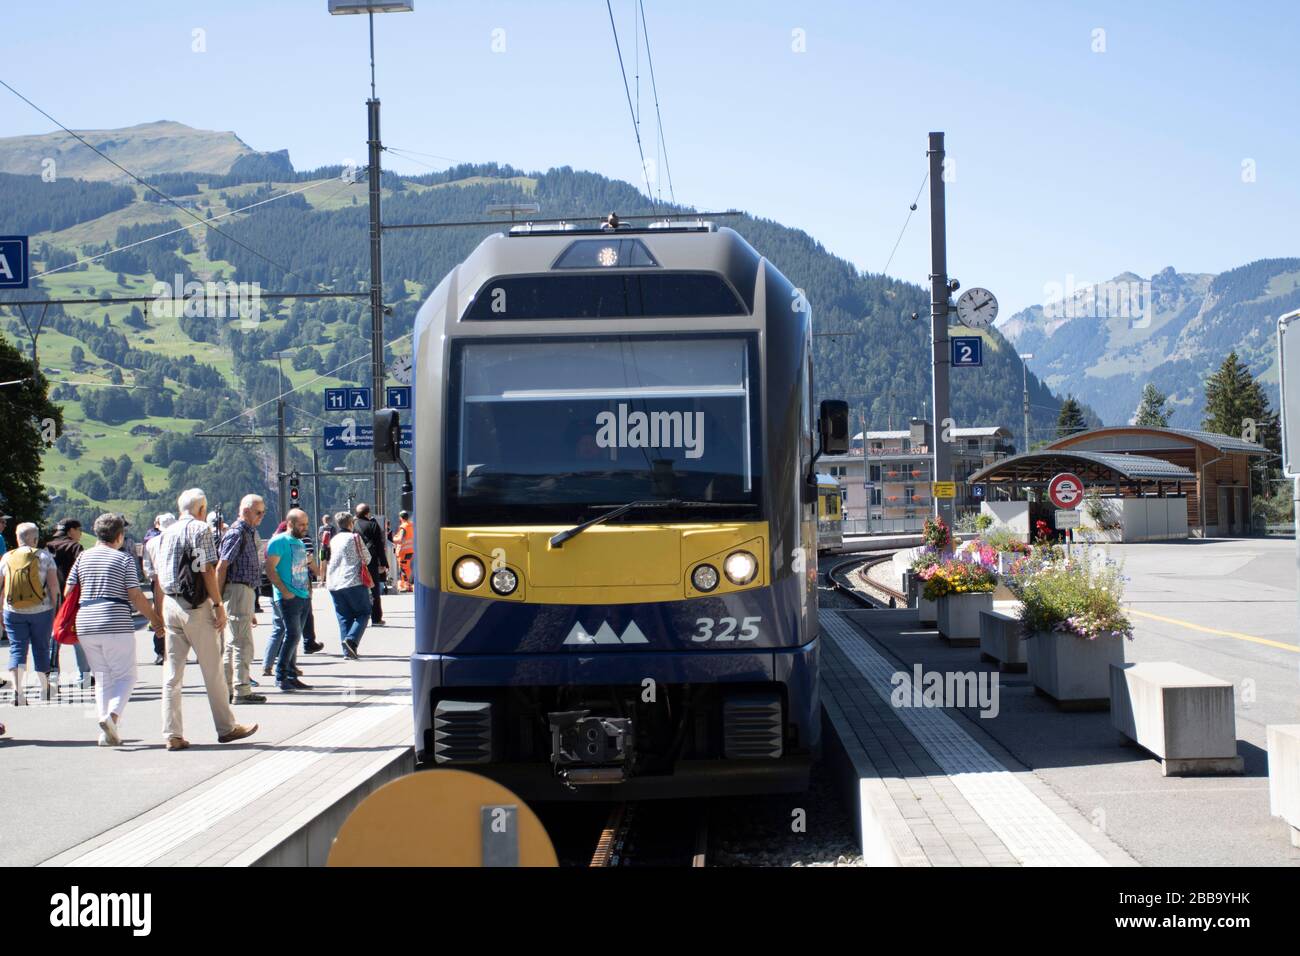 Gare Suisse Grindelwald pied du Mont Eiger, Suisse, Europe, 05/09/2019, Gare Suisse Grindelwald pied du Mont Eiger, train enthu Banque D'Images